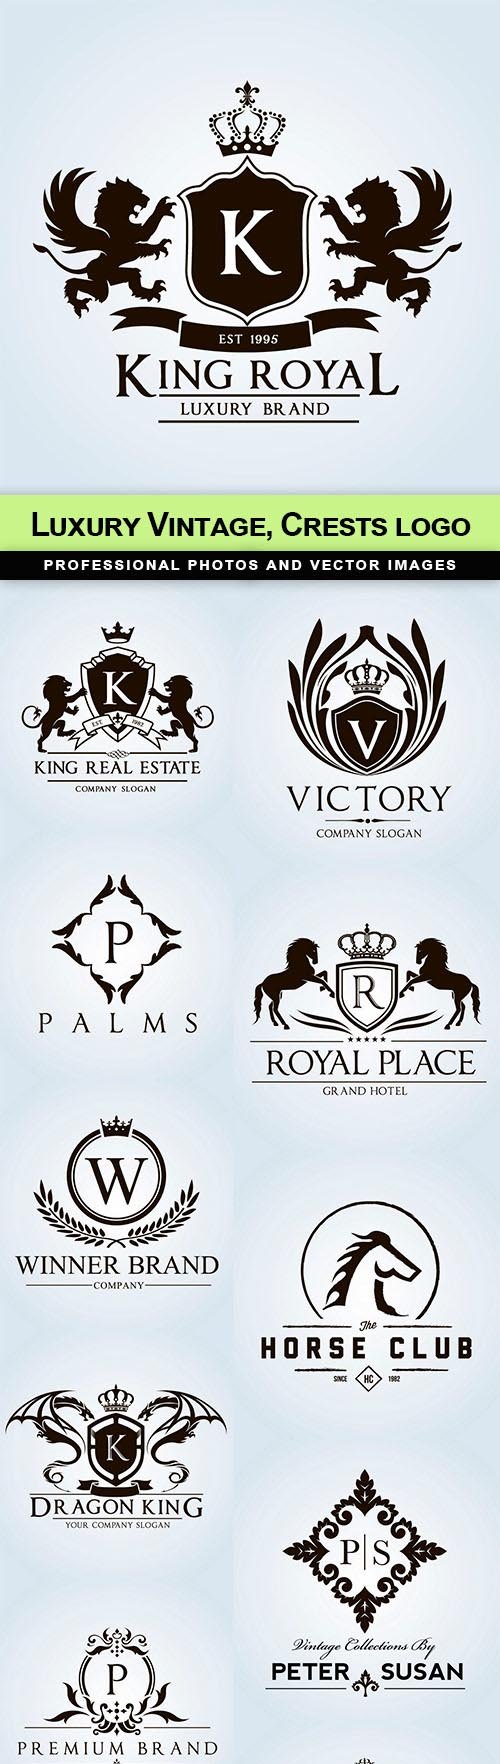 Luxury Vintage, Crests logo - 15 EPS